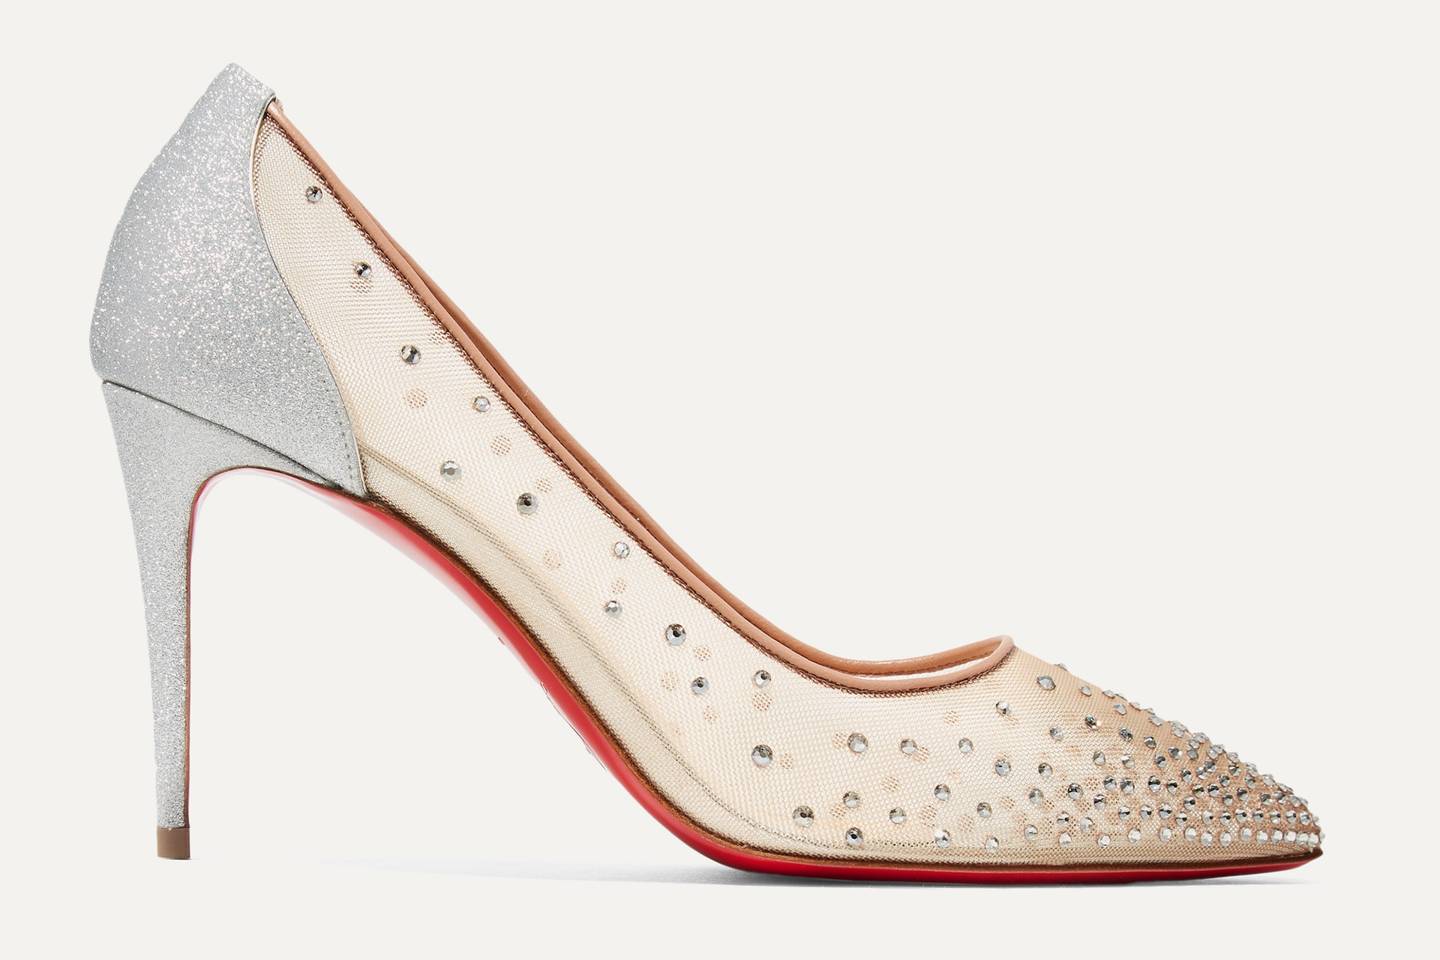 17 of the Best Designer Wedding Shoes for 2020 Heels